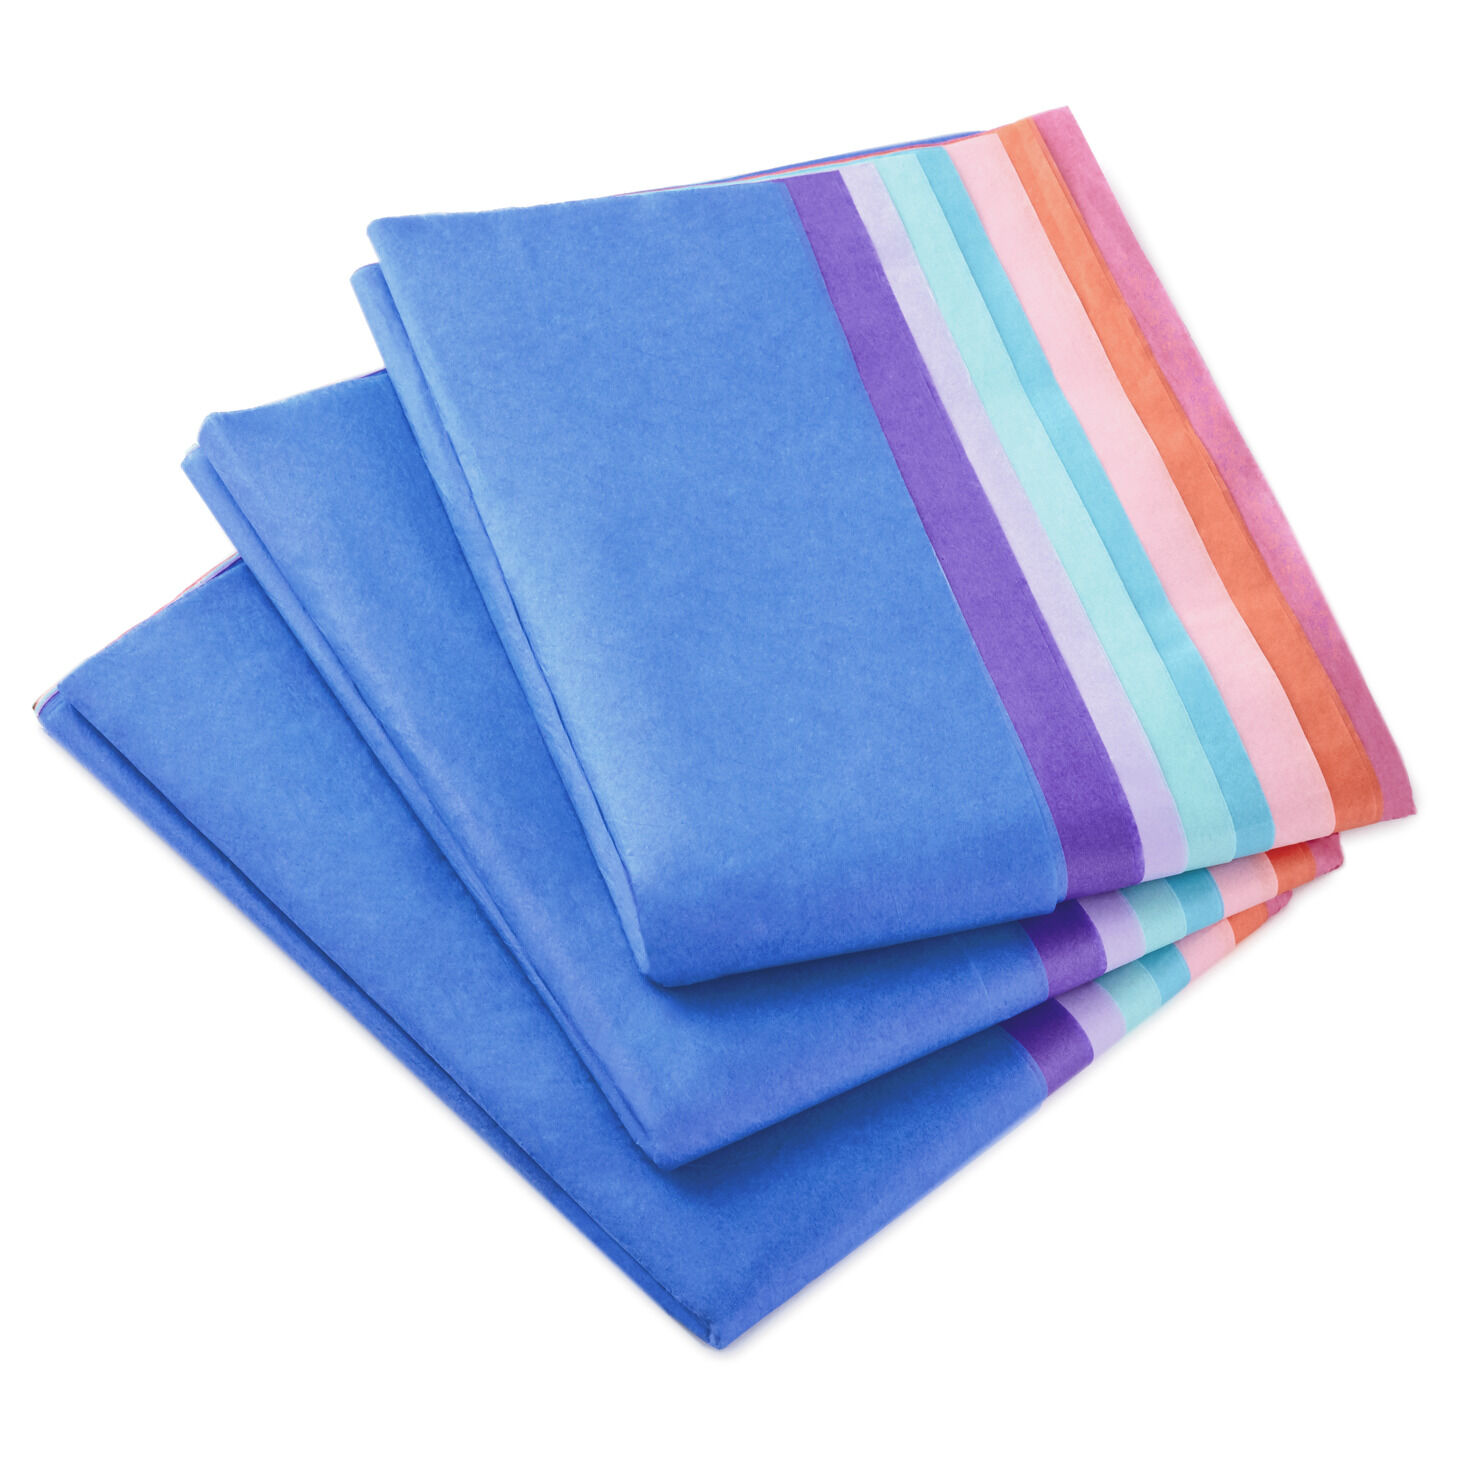  Solid Color Tissue Paper Assortments